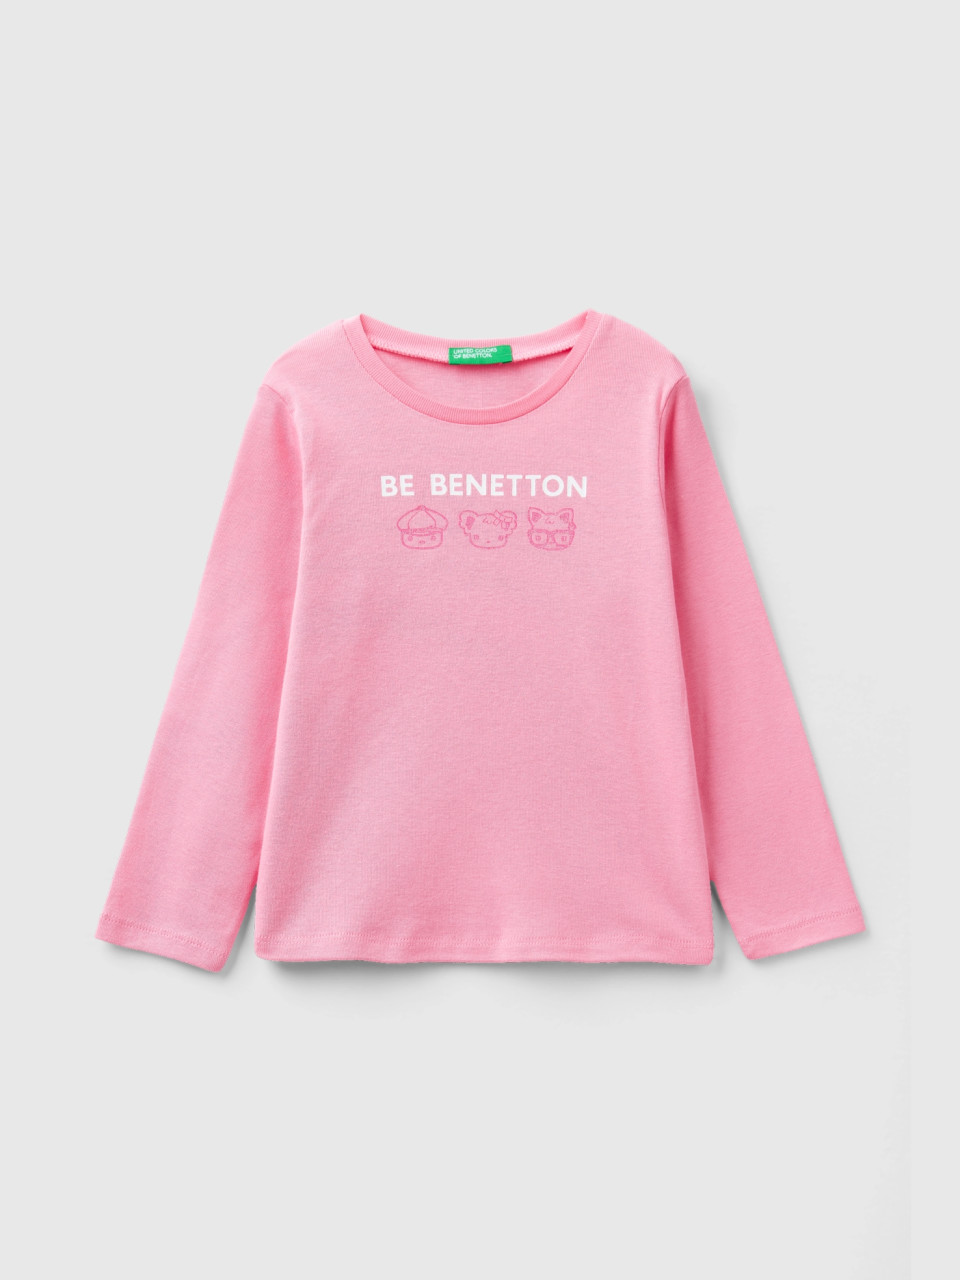 Benetton, Long Sleeve T-shirt With Glittery Print, Pink, Kids